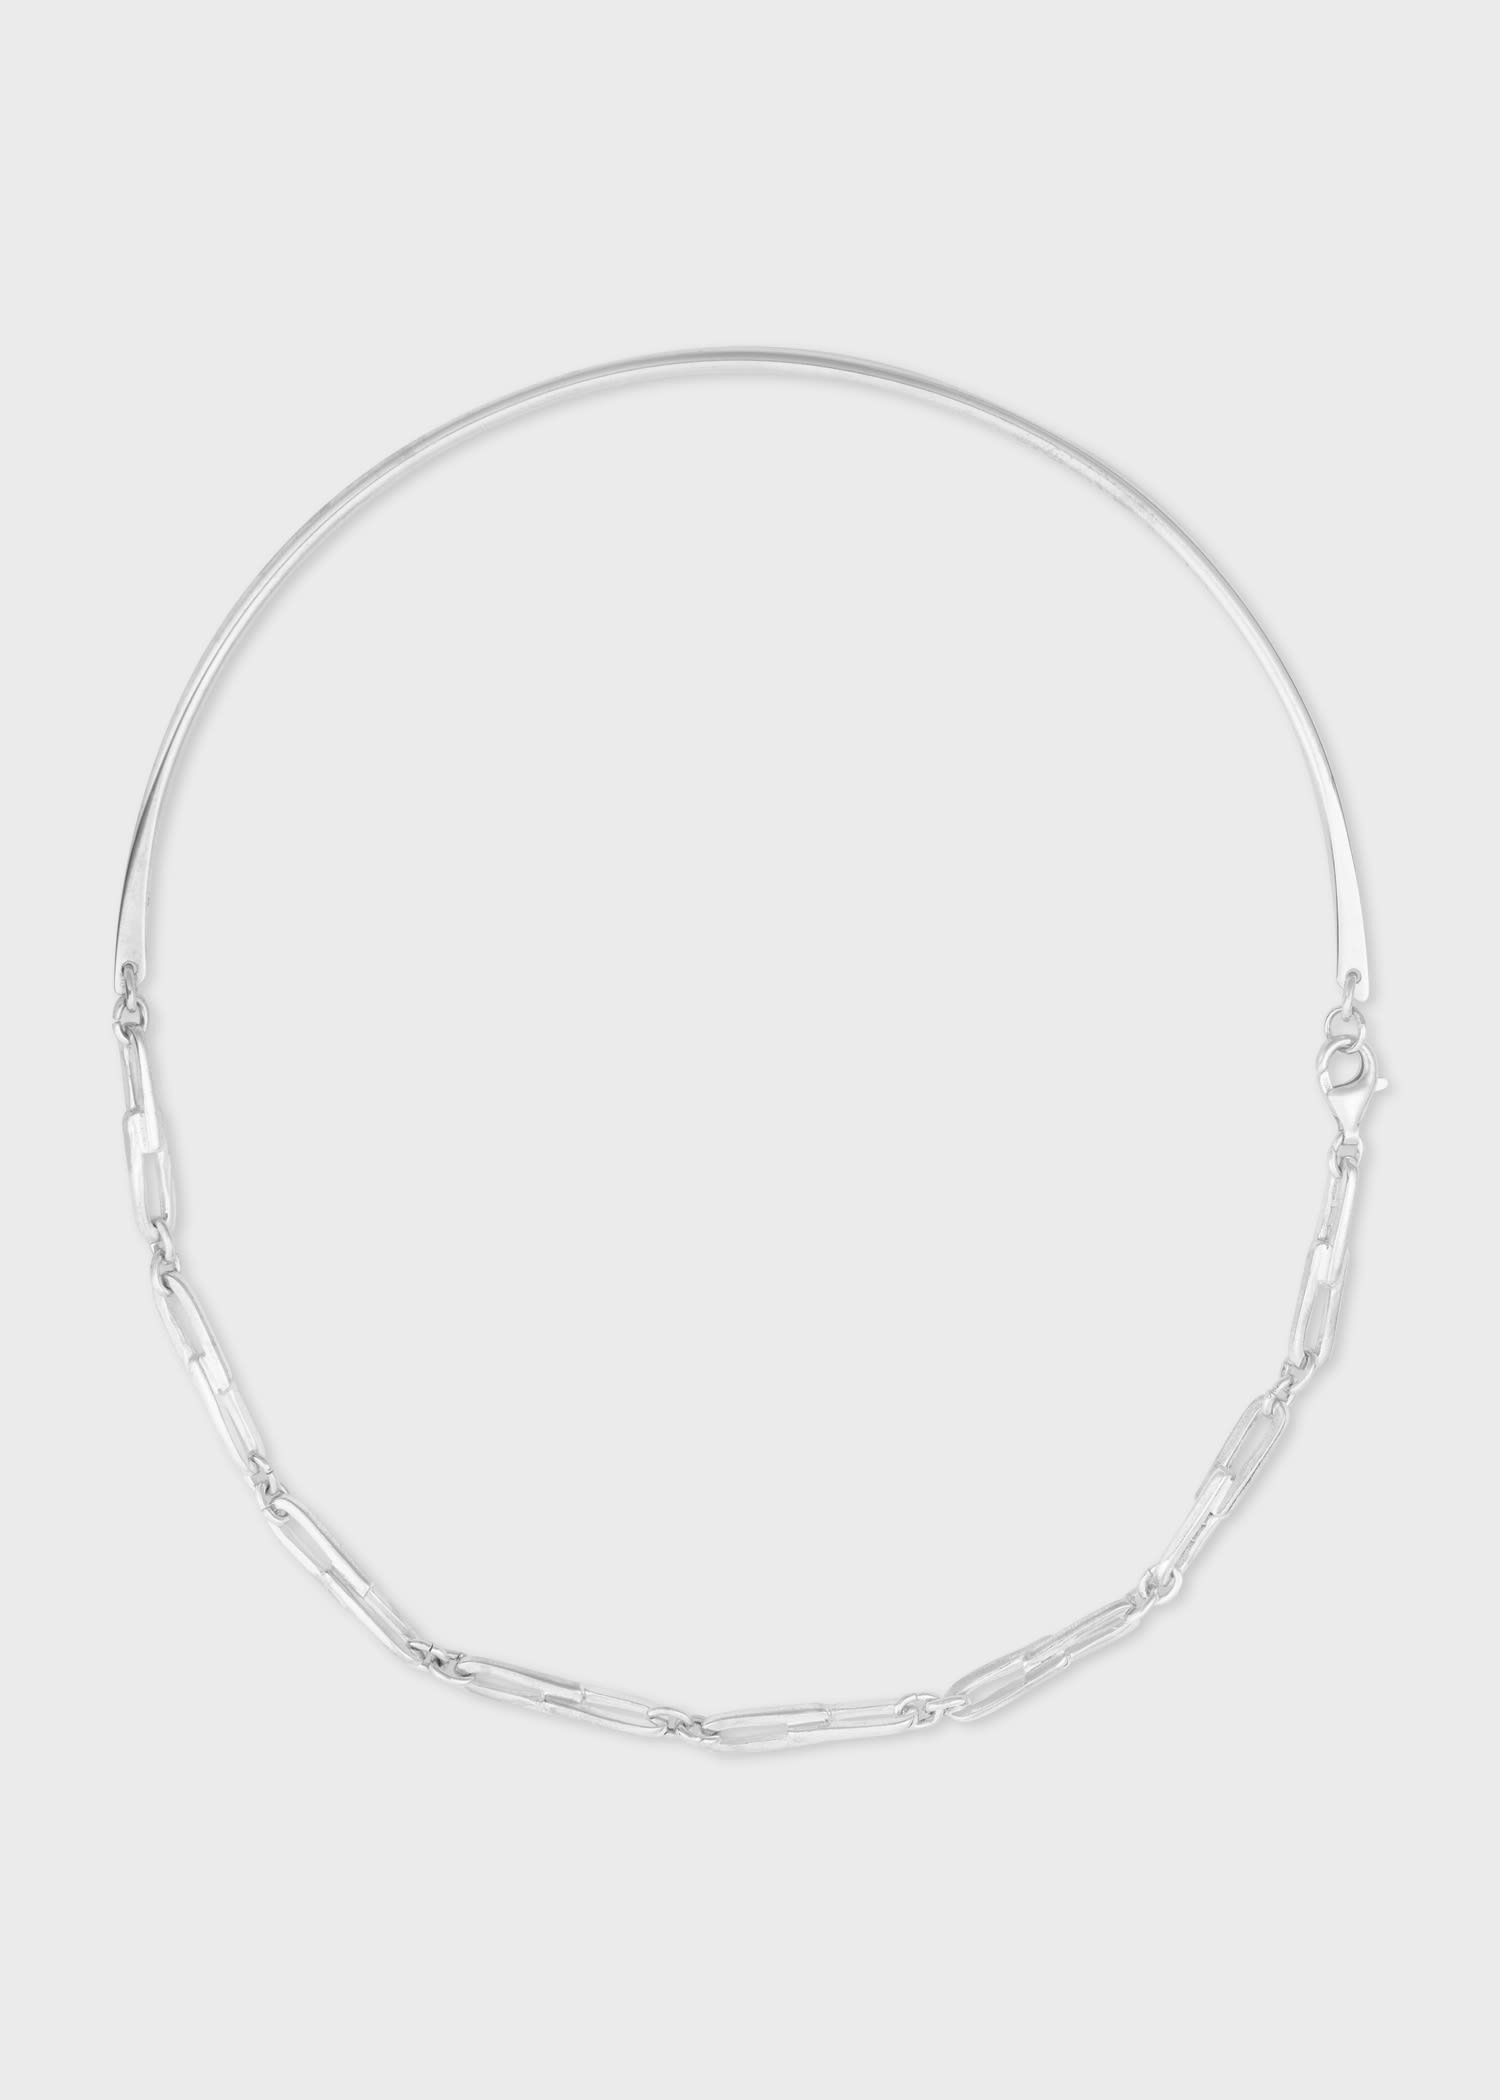 'Frank' Silver Choker Necklace - 2